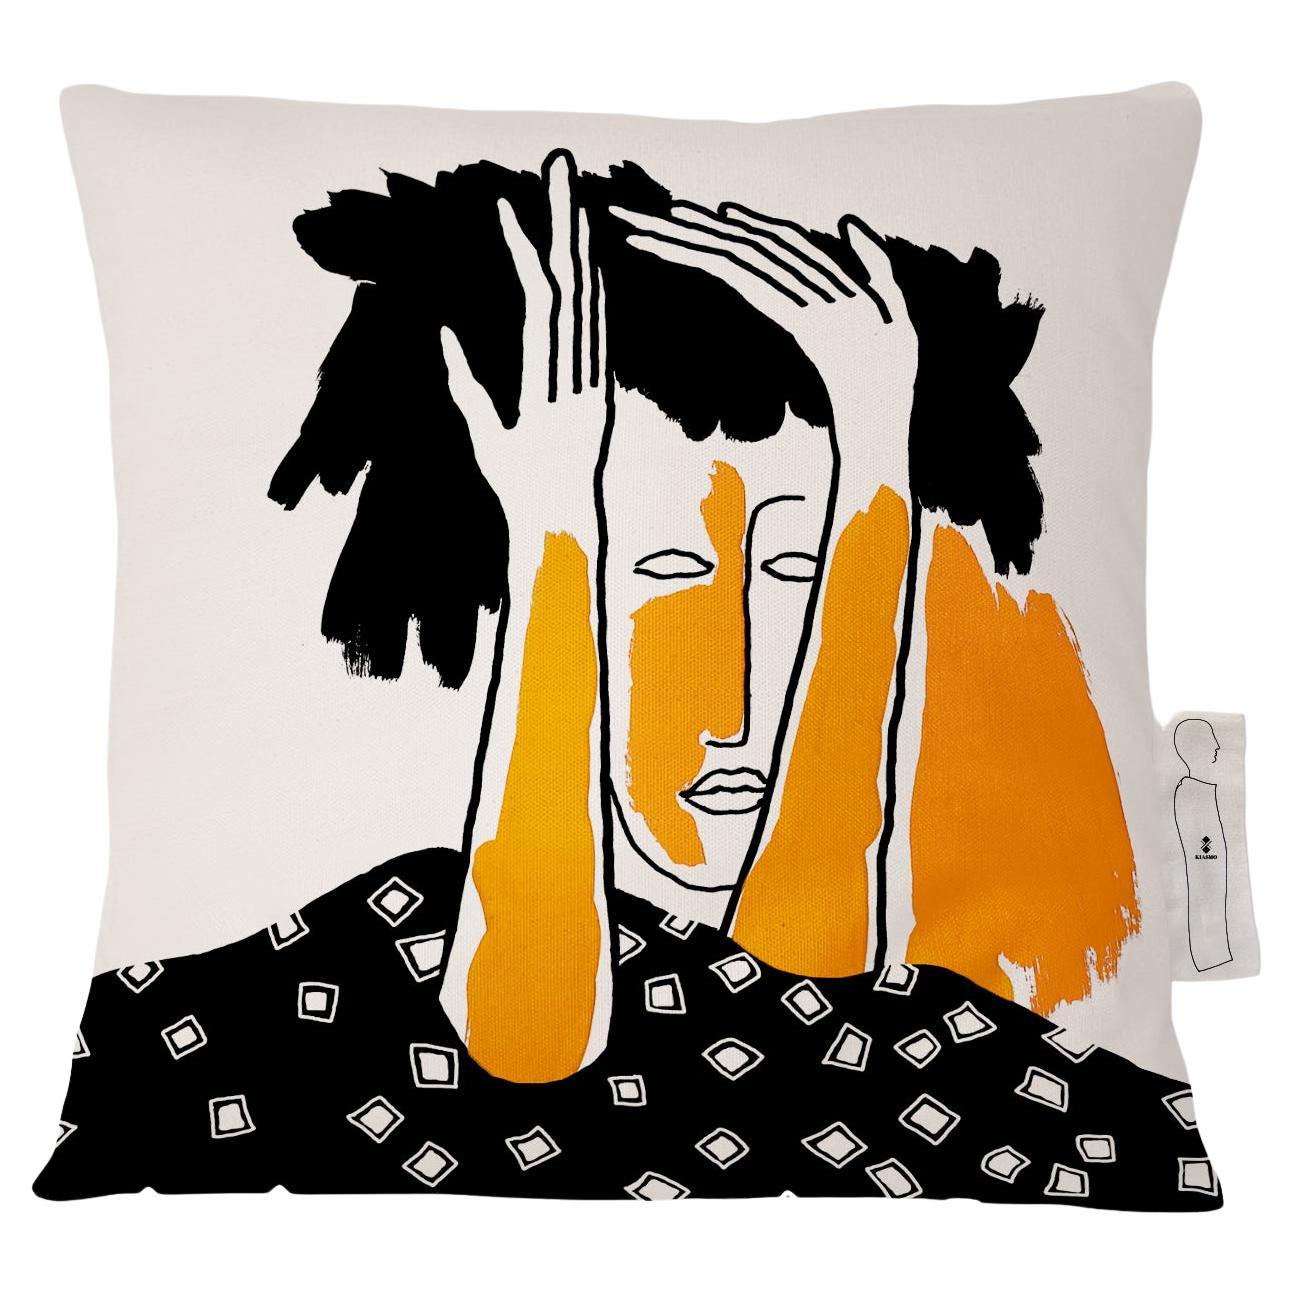 21st Century Pillows Kiasmo "Nostalghia VI" Designer Vincenzo D'alba For Sale